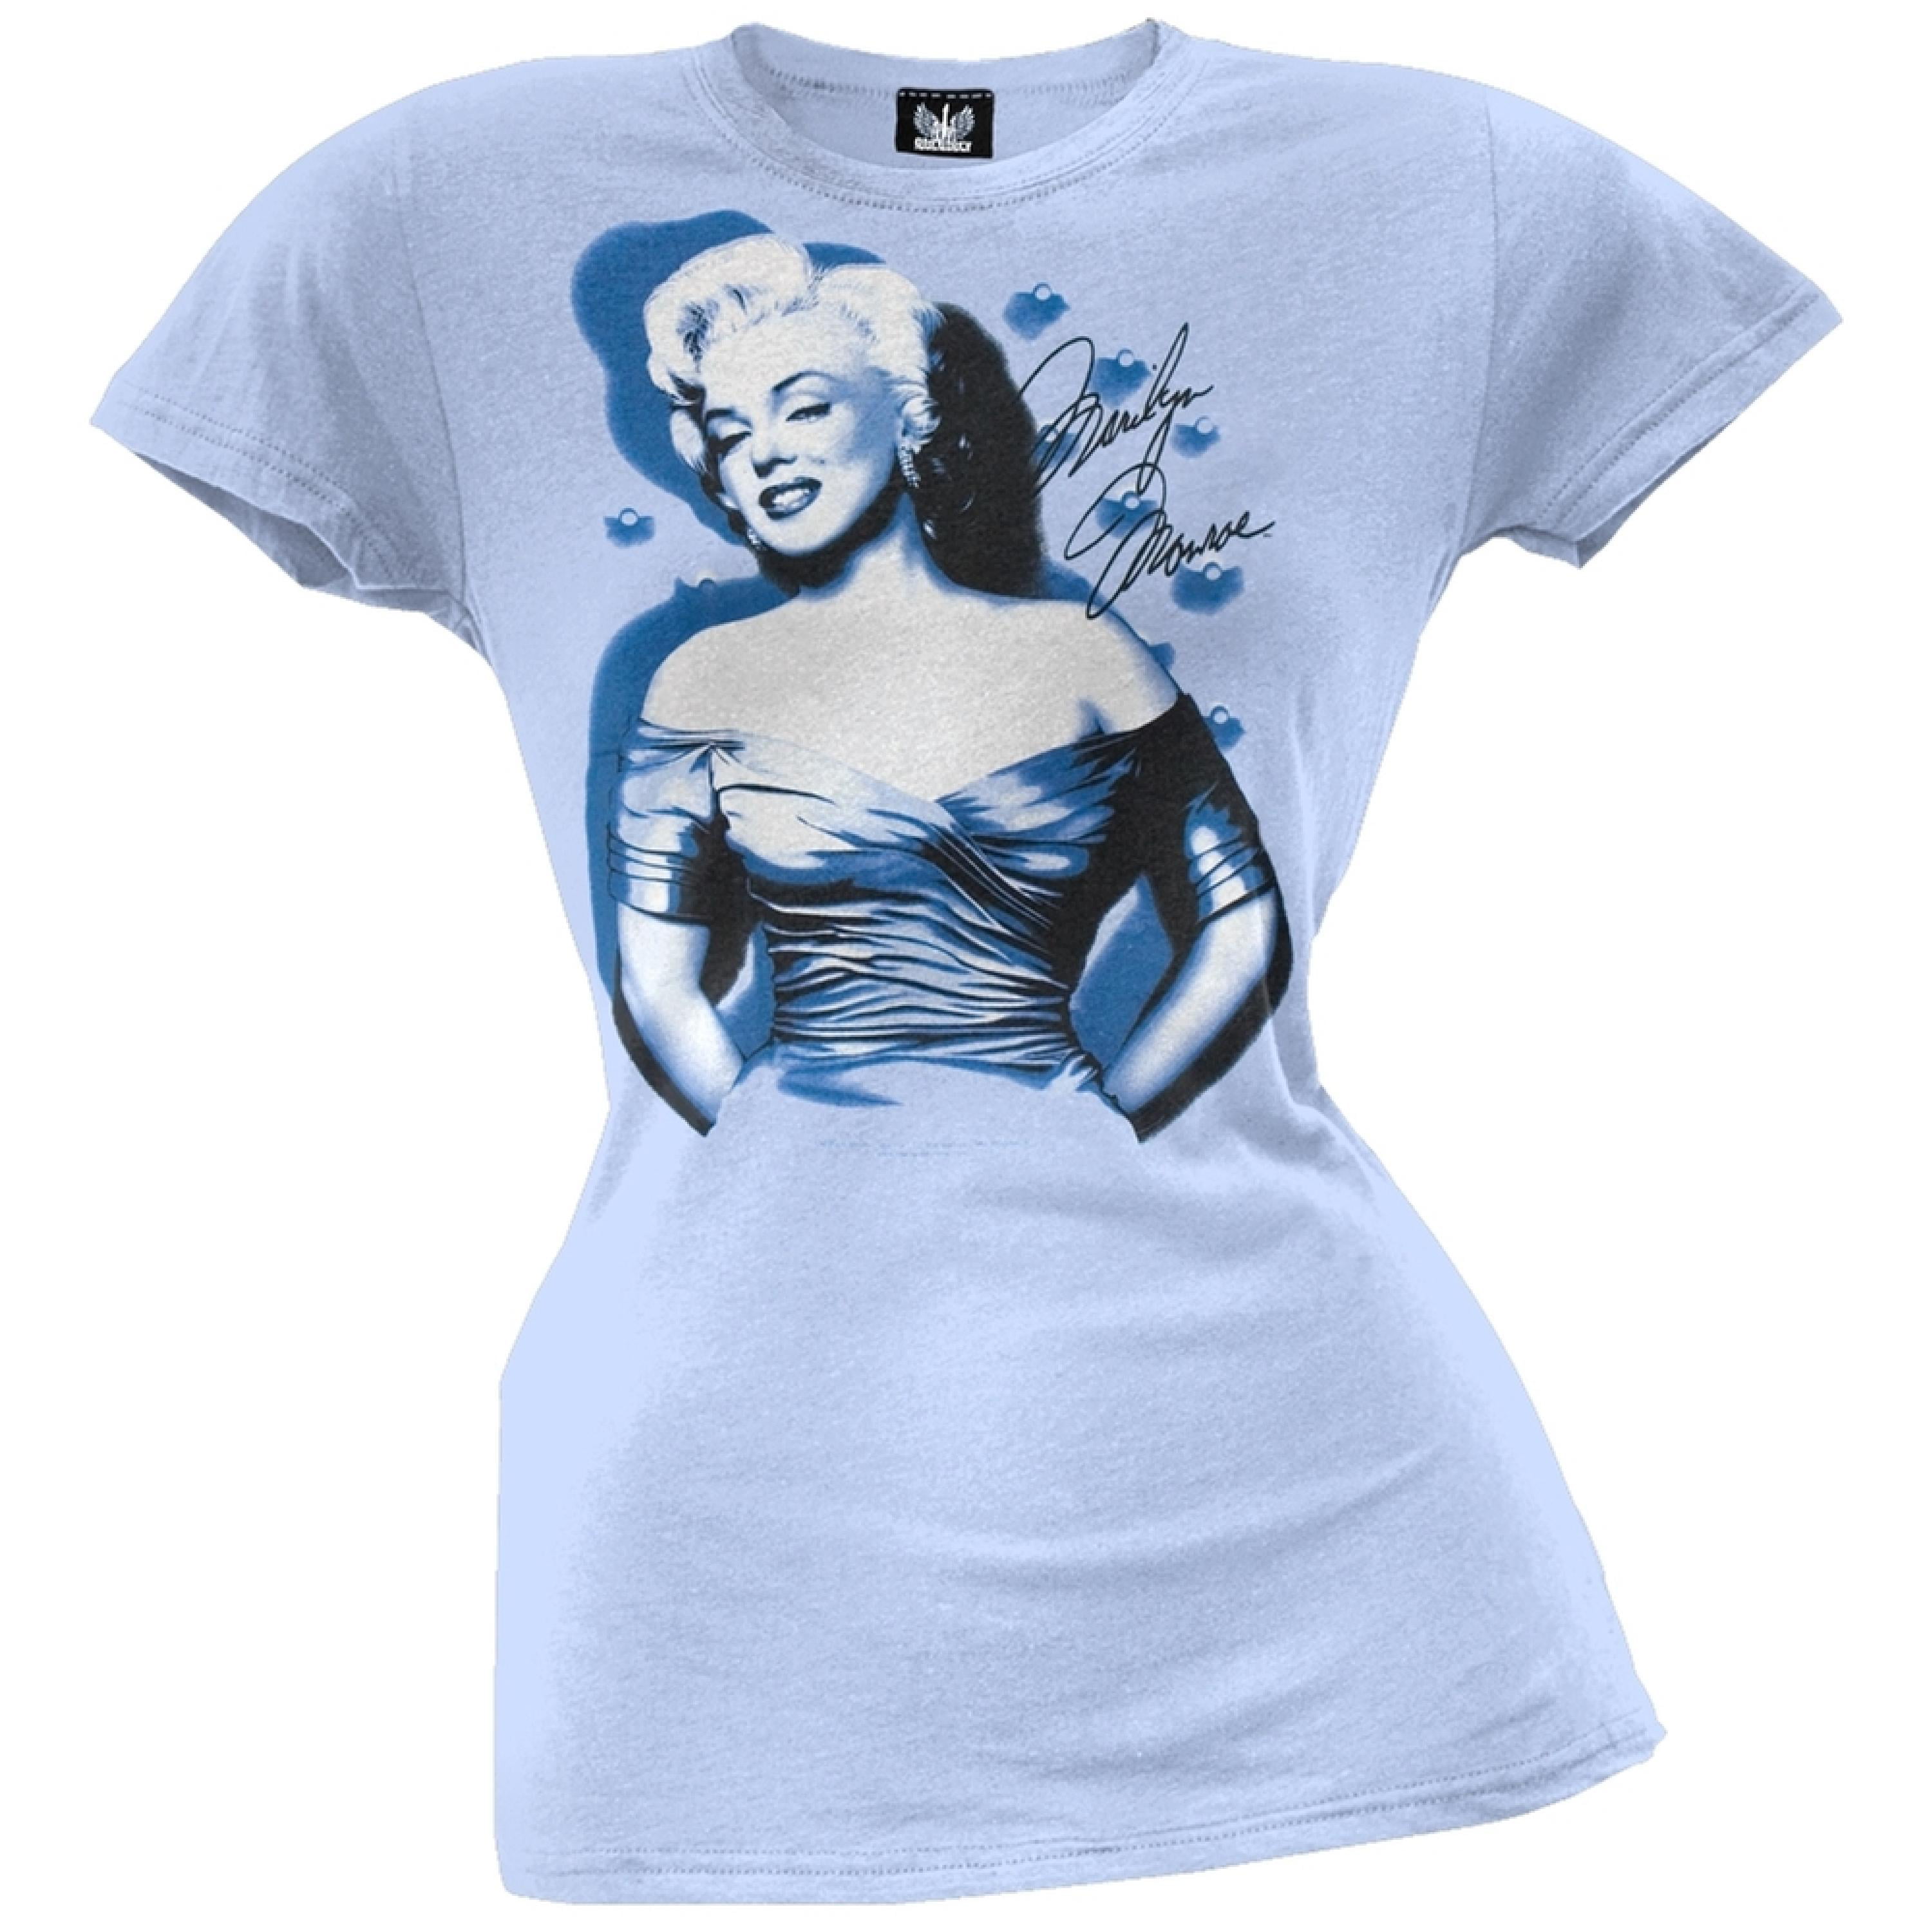 Marilyn Monroe - Marilyn Monroe - Blue Dress Juniors T-Shirt - Small